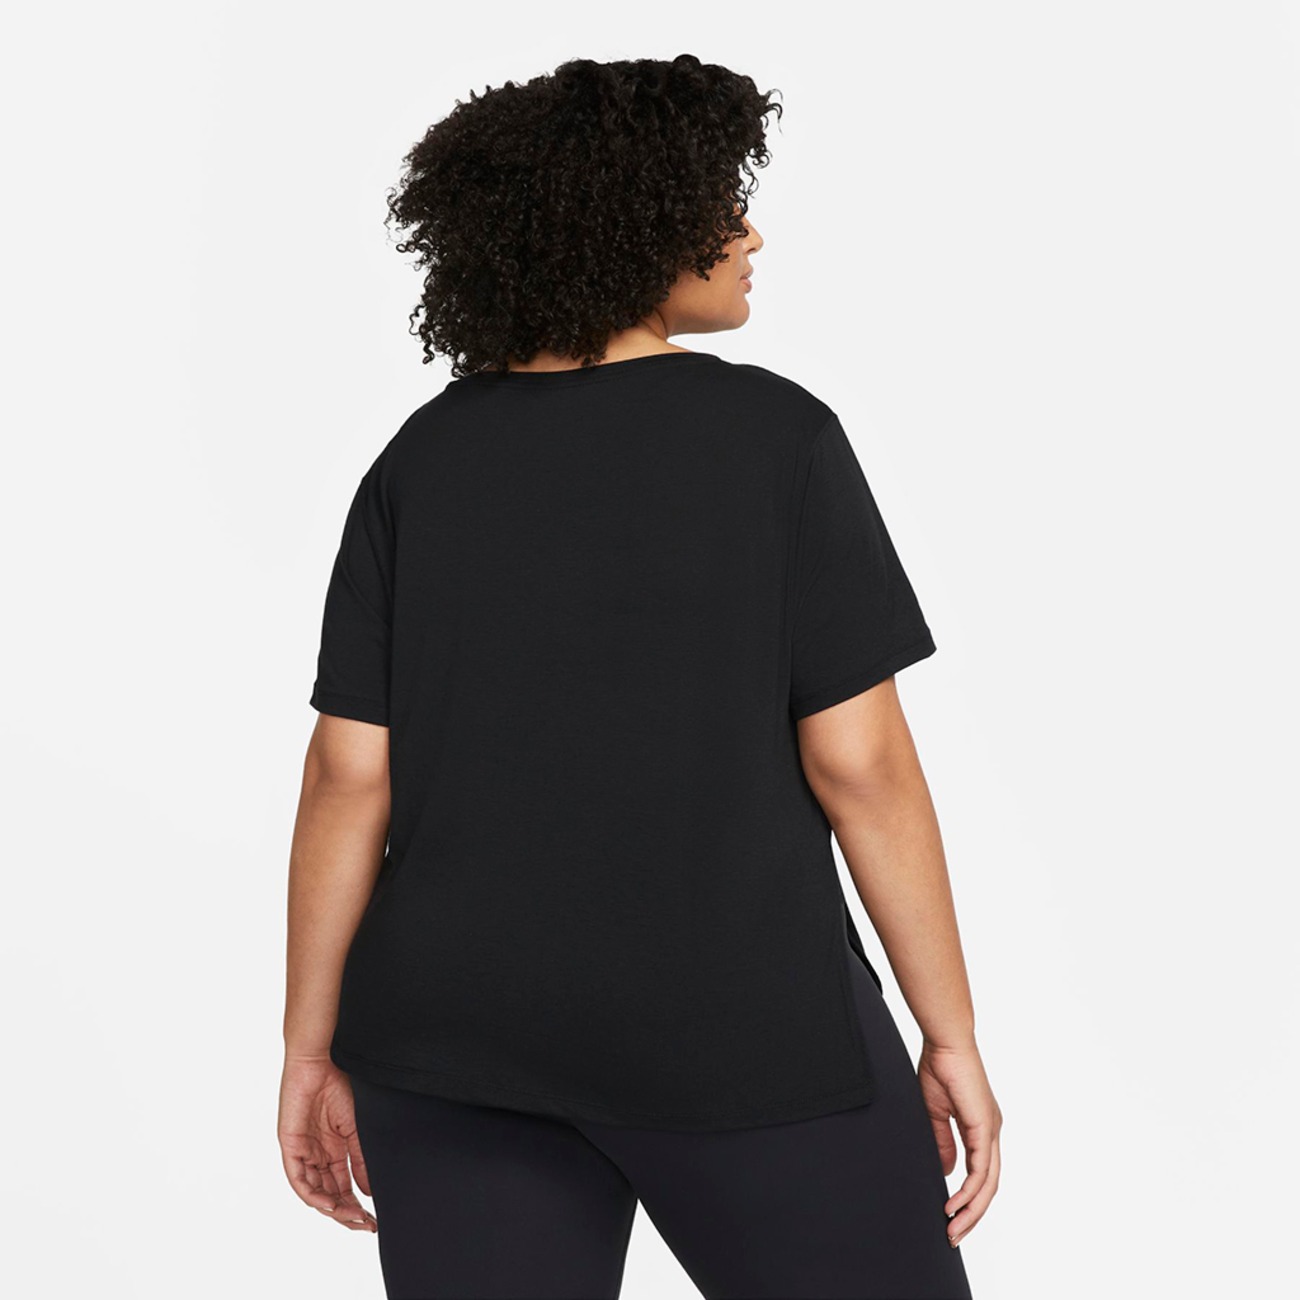 Camiseta Nike Yoga Dri-fit Feminina